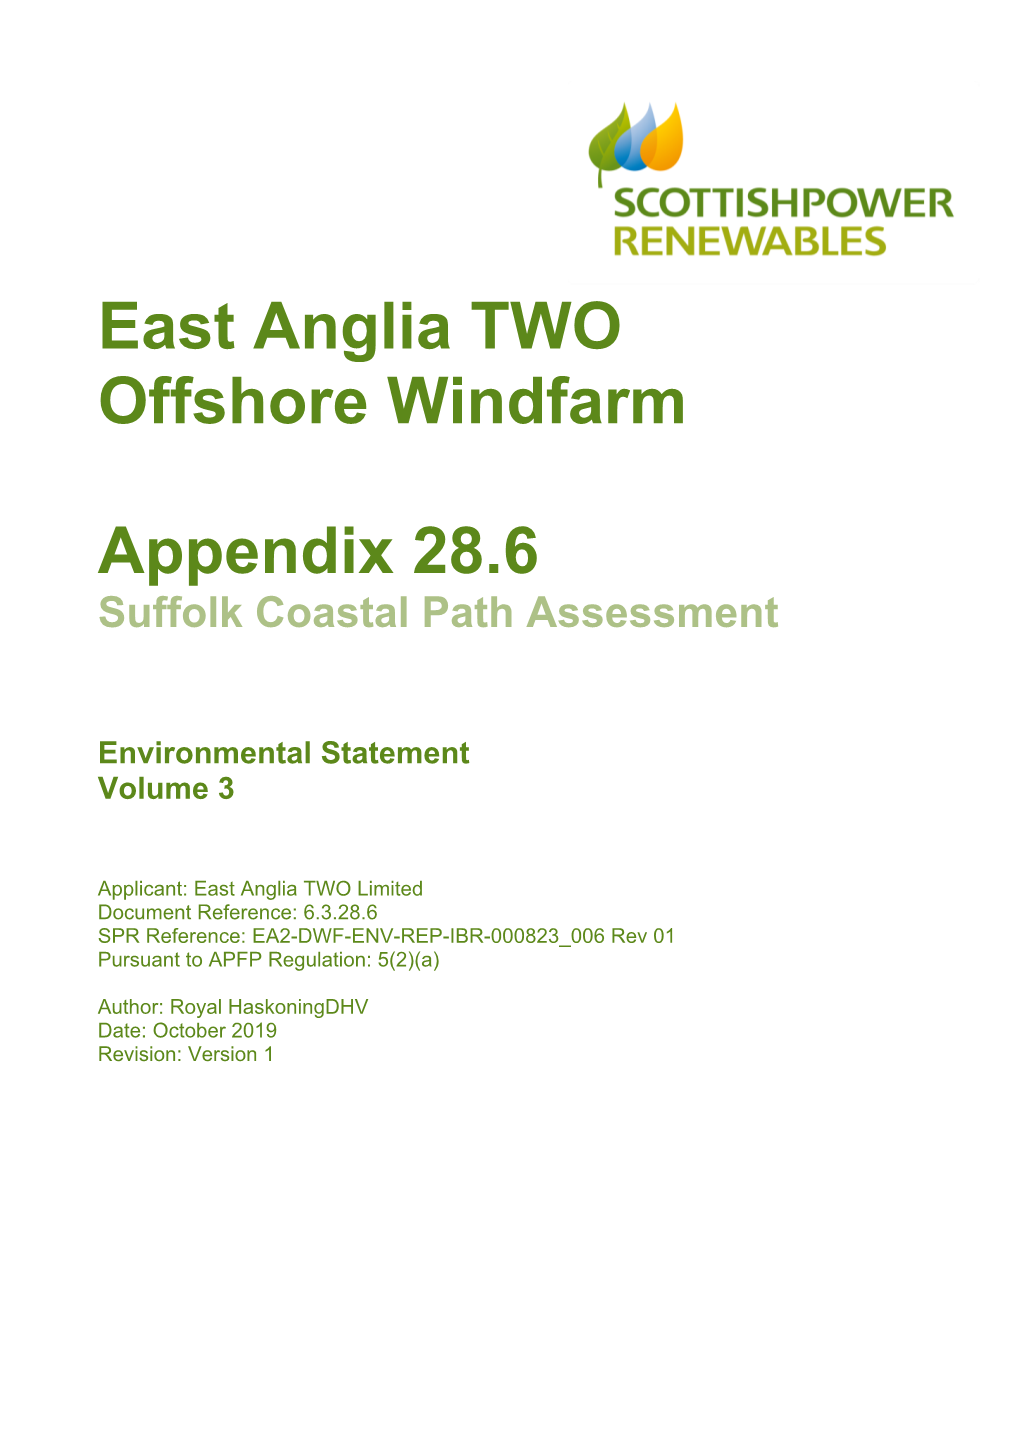 East Anglia TWO Offshore Windfarm Appendix 28.6